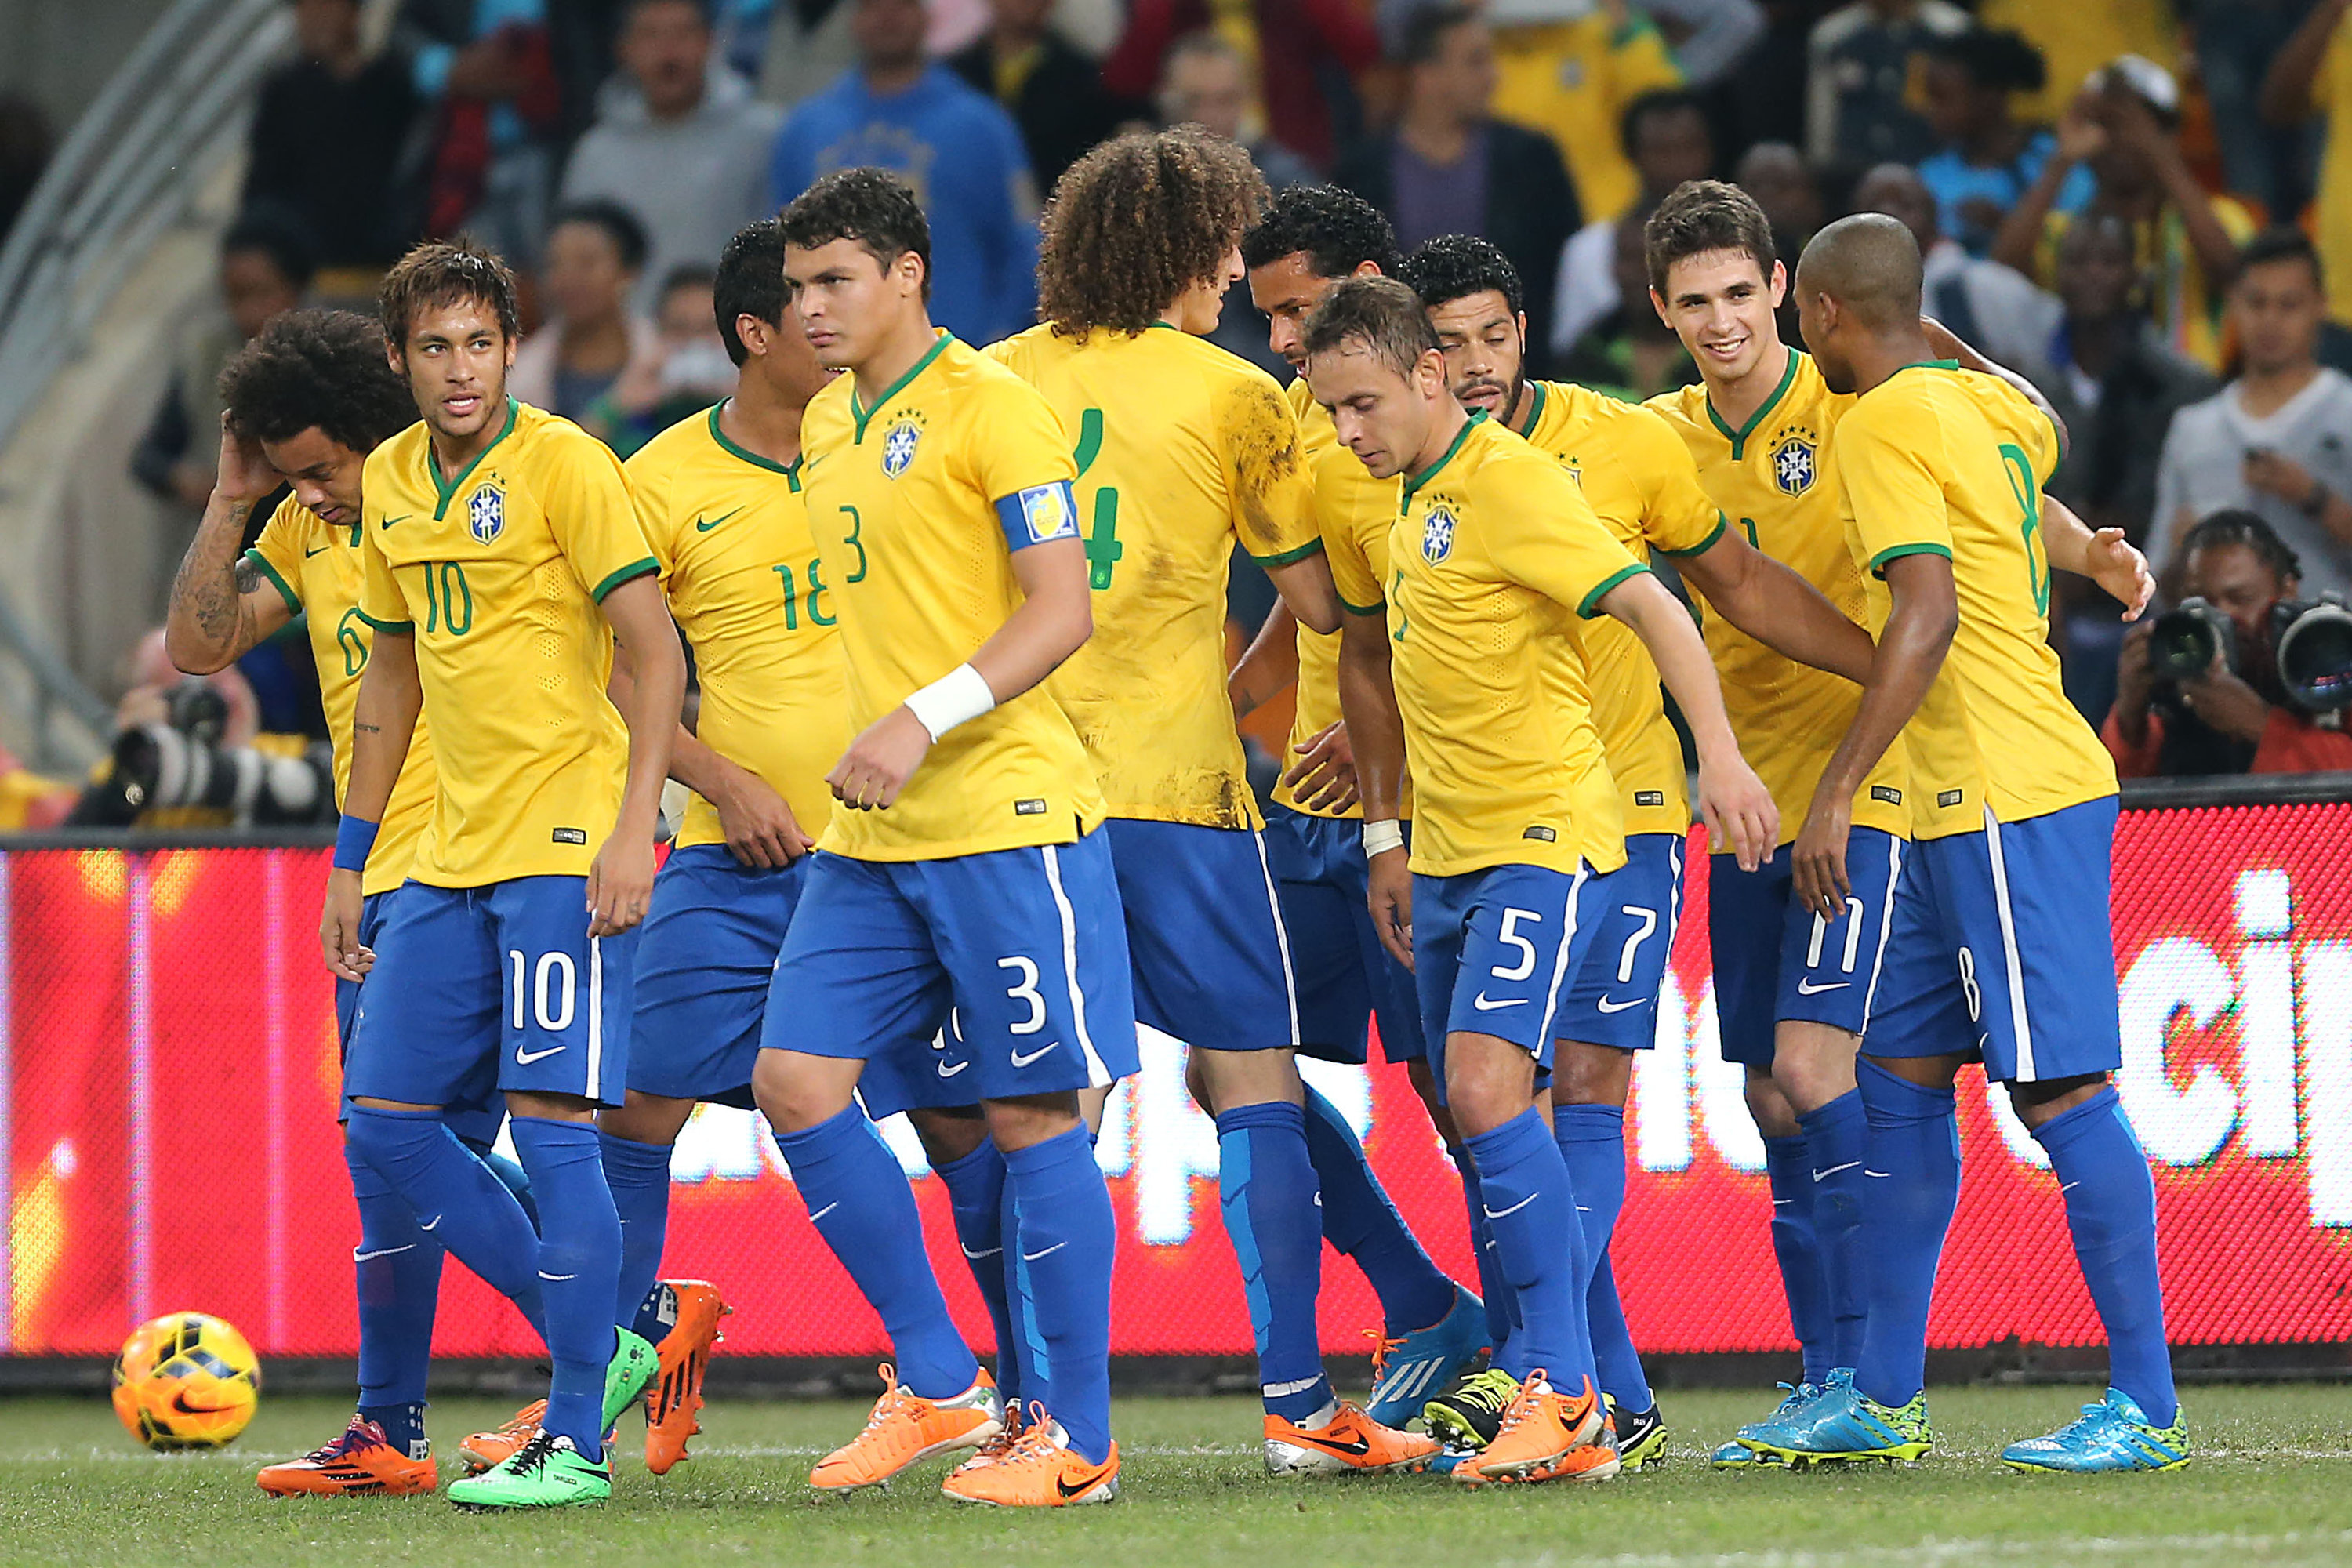 Preview of the Seleção World Cup Group Games